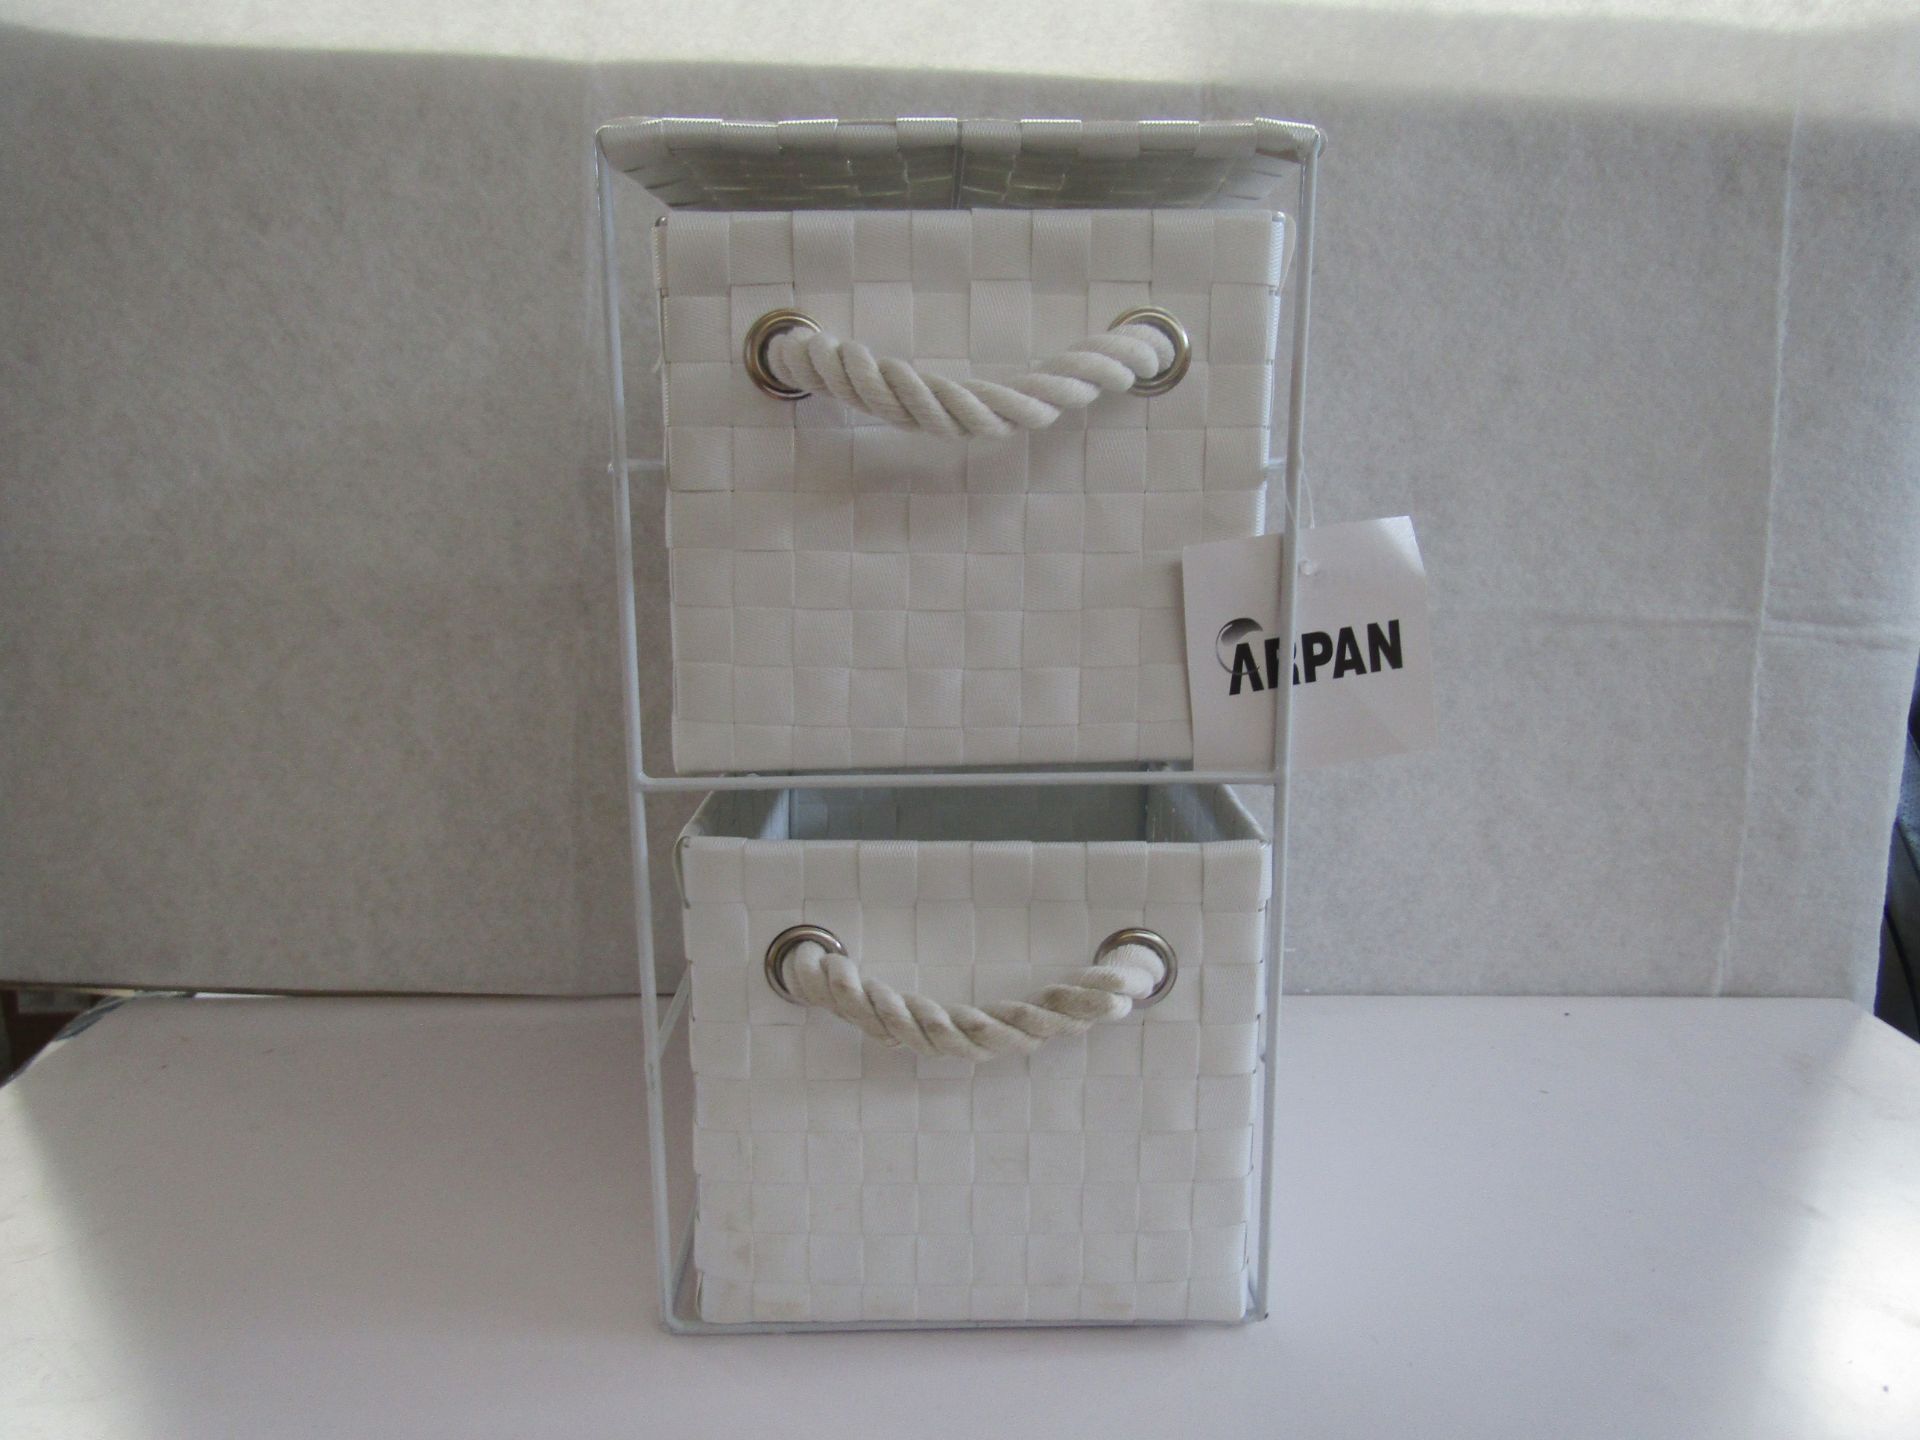 Arpan - Bathroom Small Storage Caddy - Good Condition & Boxed.